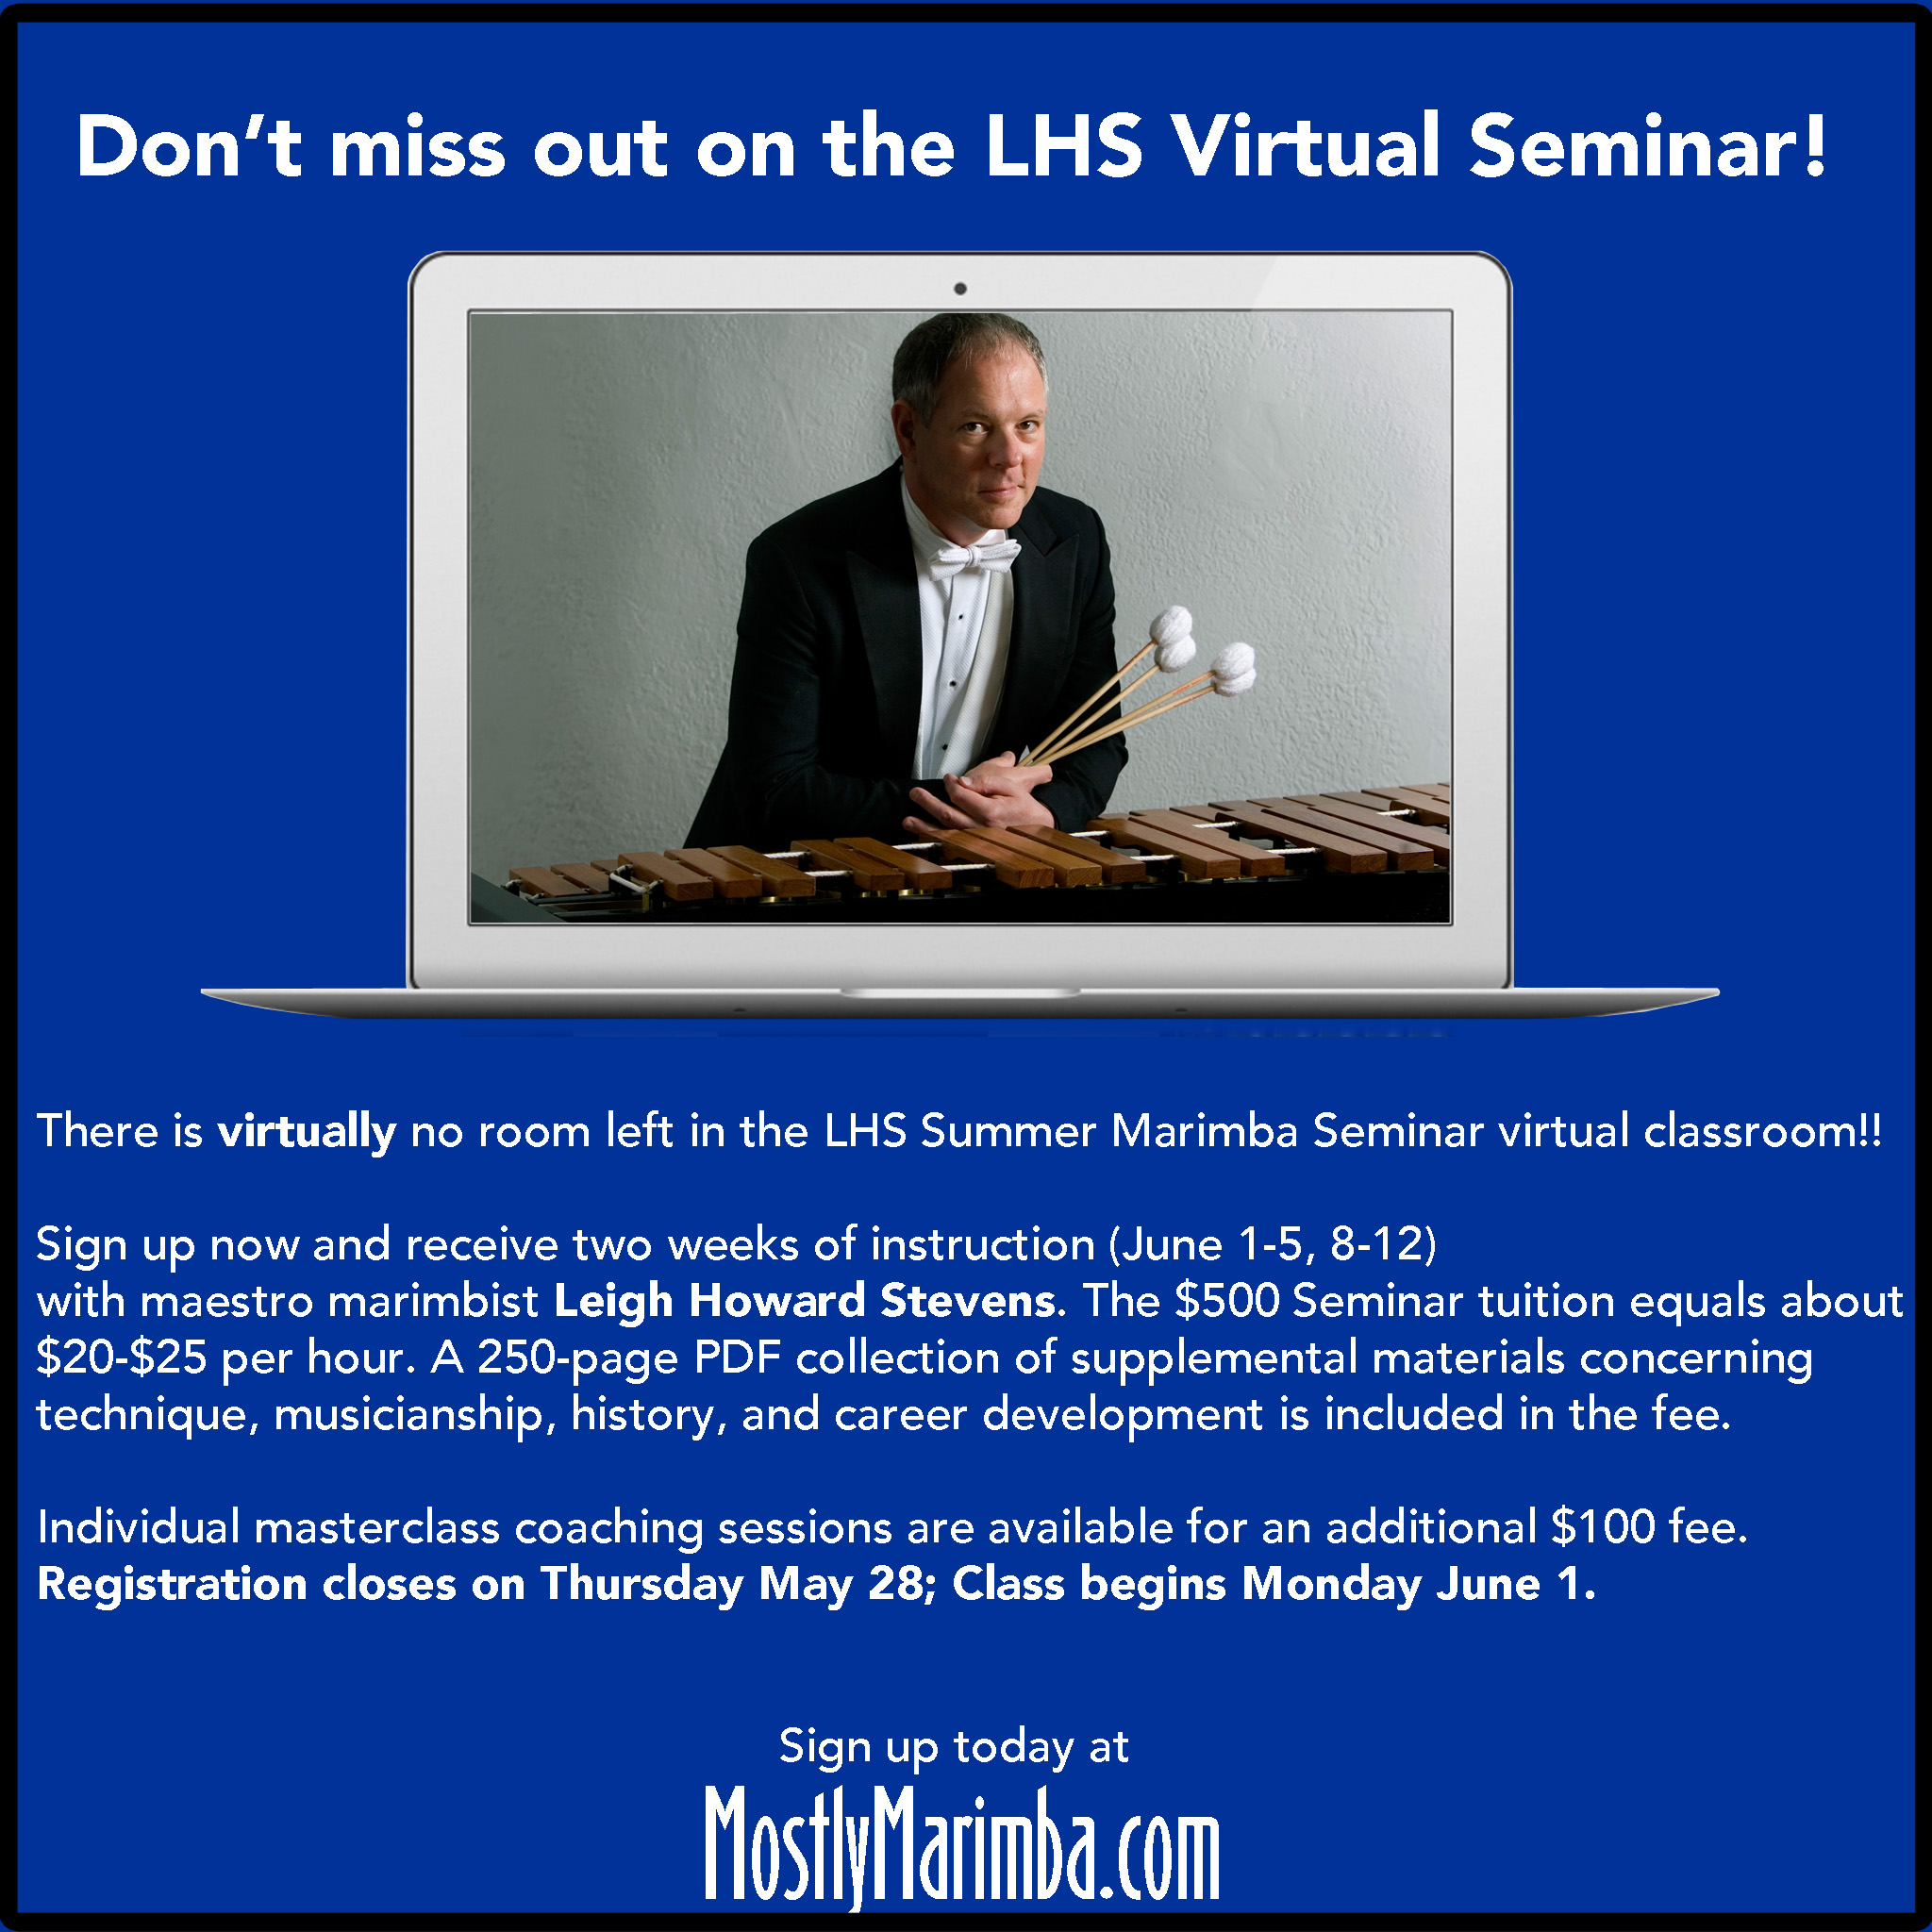 lhs virtual seminar - last call